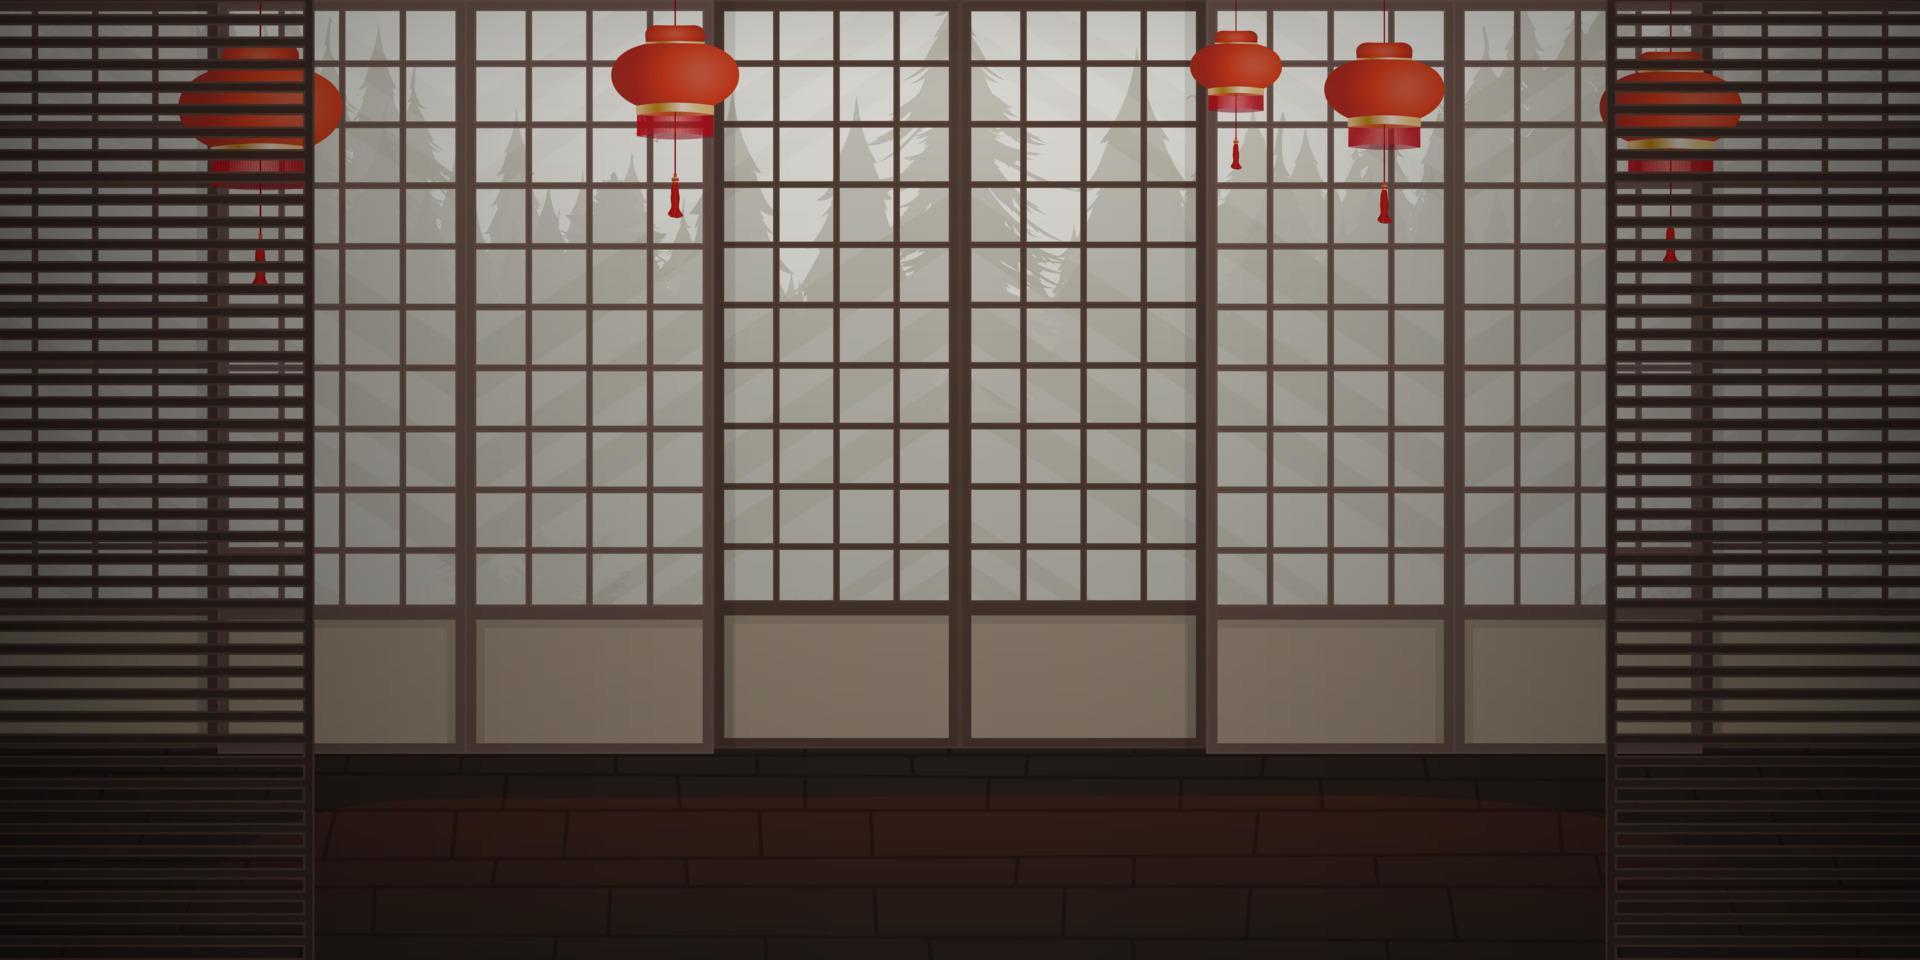 ryokan ett tomt zenrum i mycket japansk stil. tecknad stil. vektor illustration.